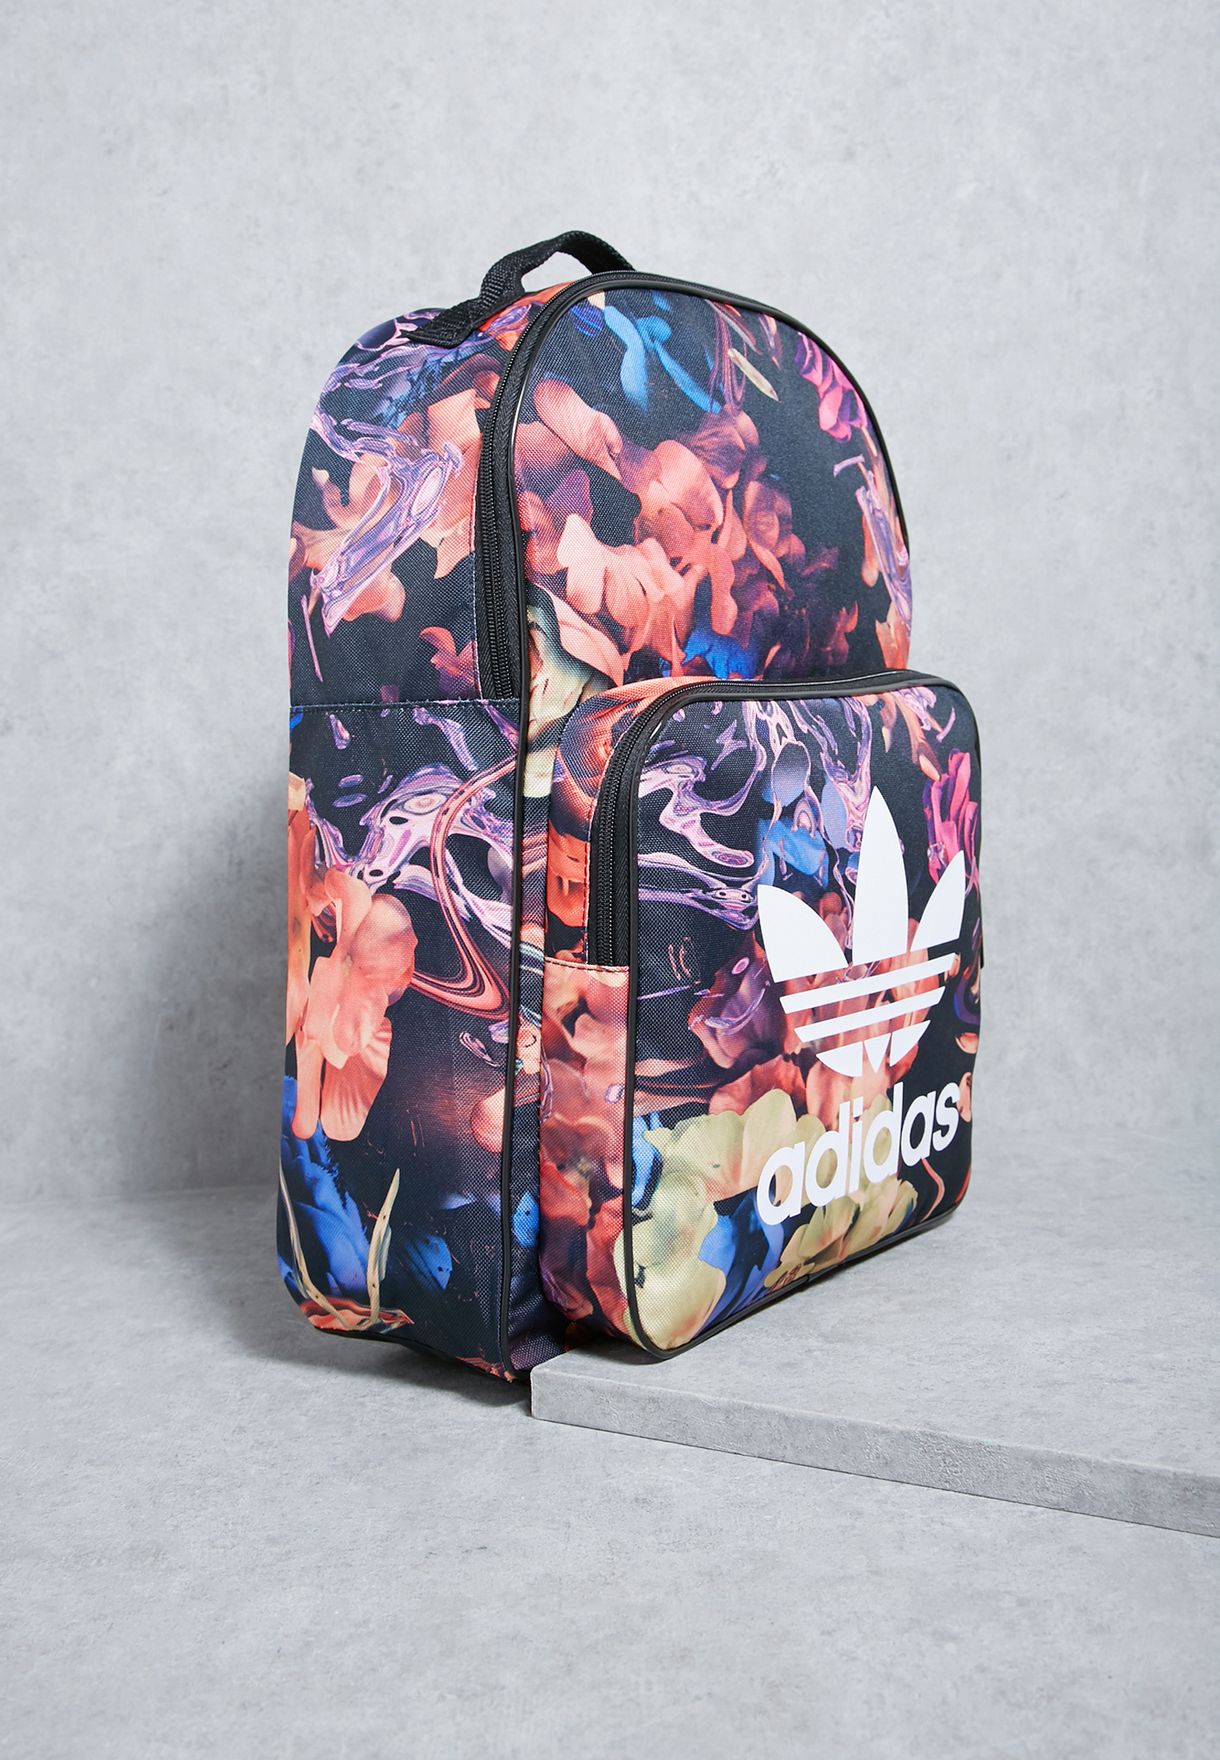 adidas print backpack